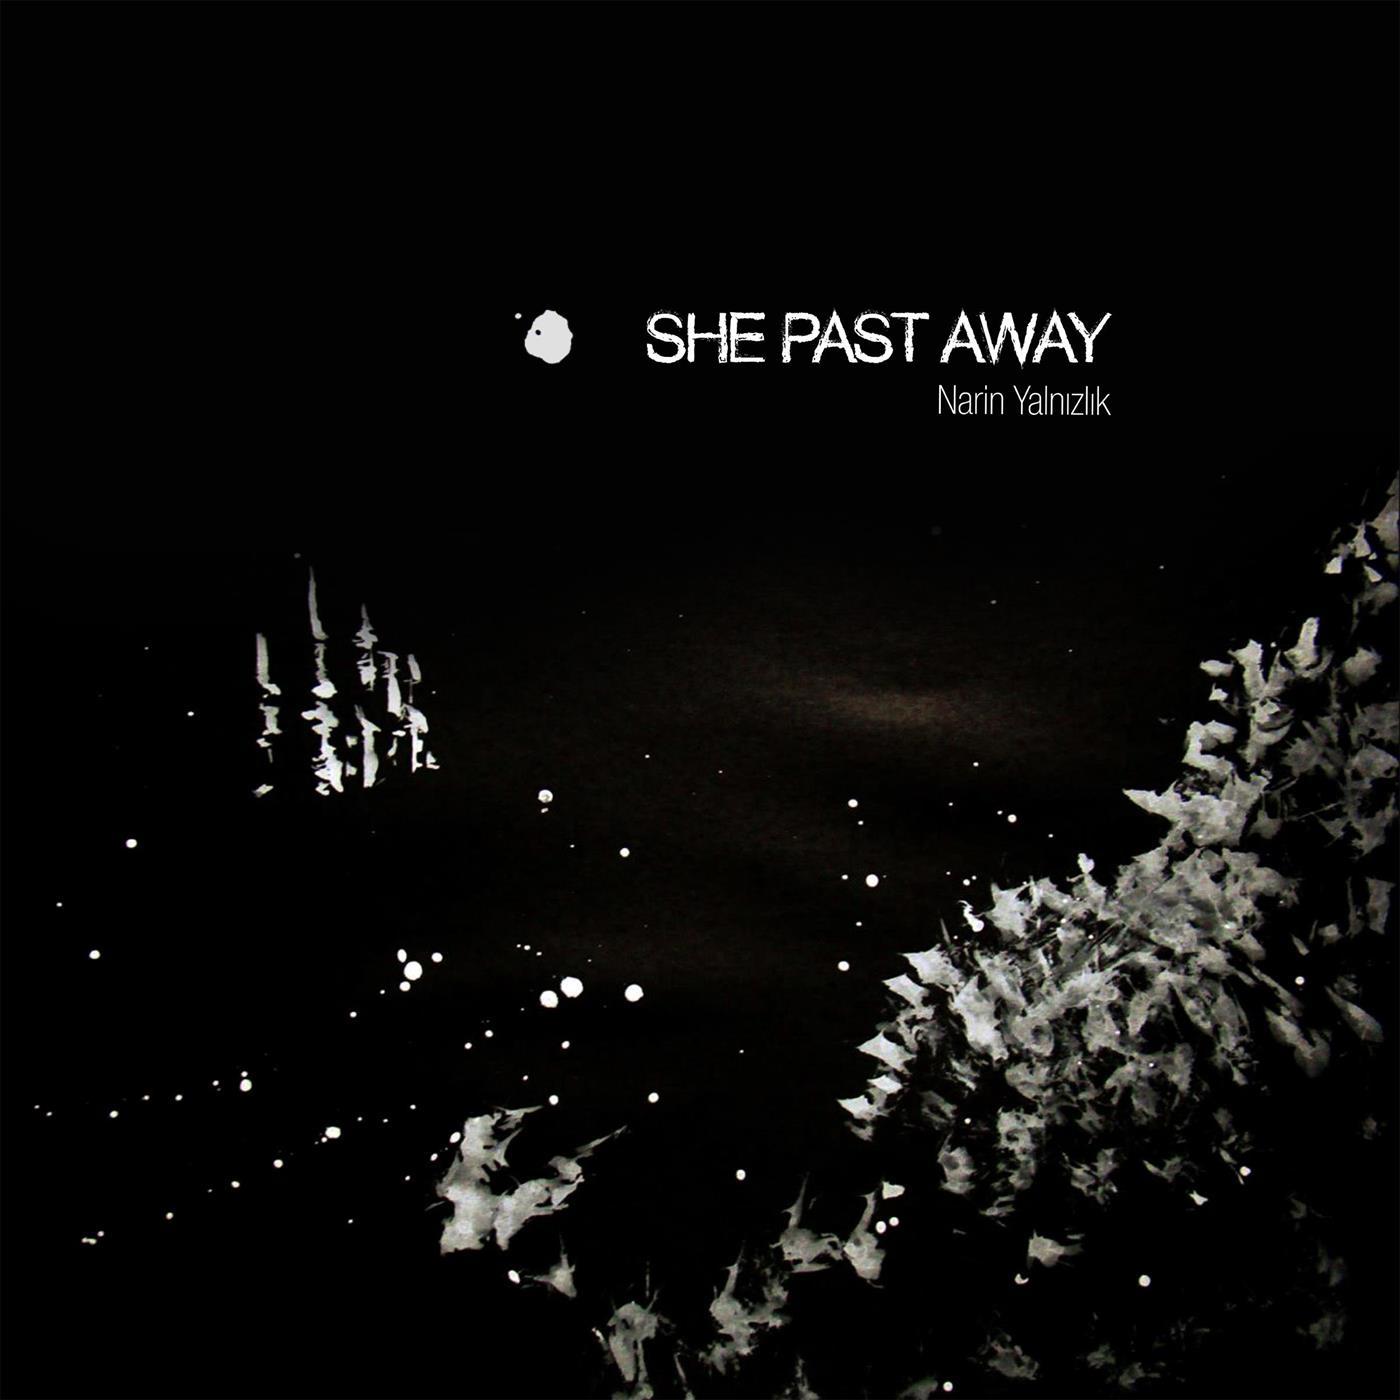 She Past Away - Kuruyordu Nehir